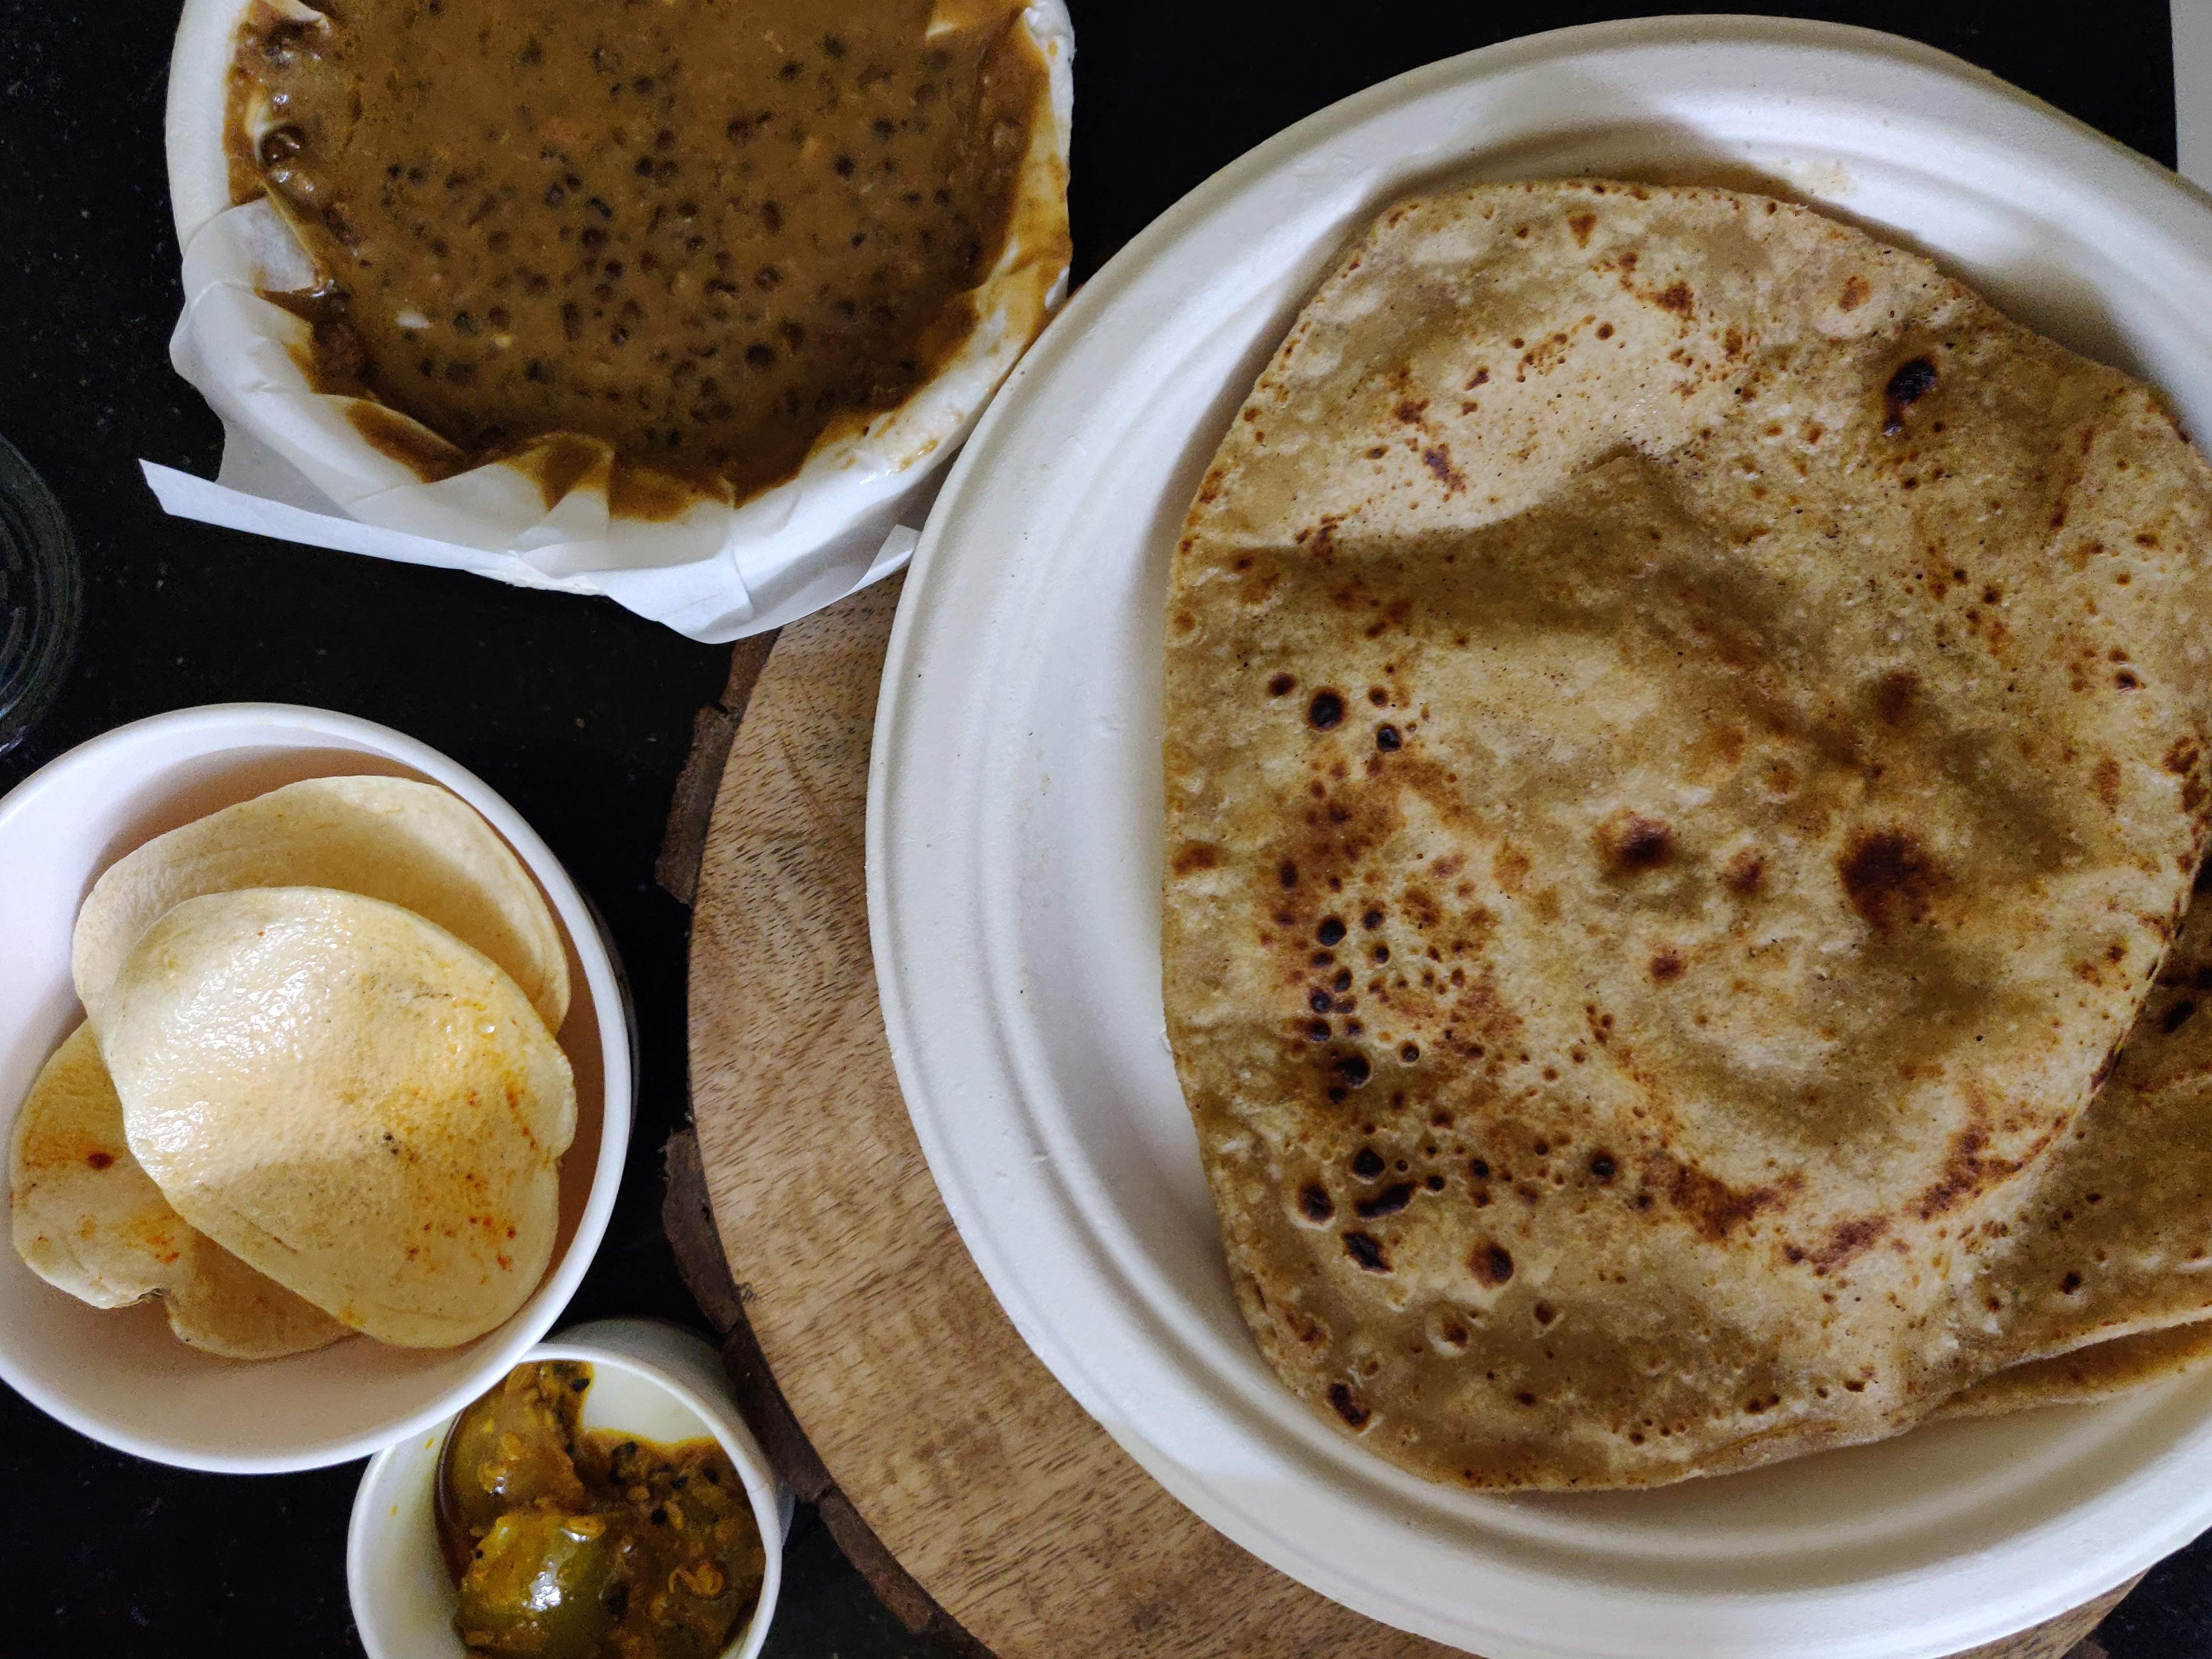 Dish,Food,Cuisine,Ingredient,Roti,Roti canai,Naan,Chapati,Flatbread,Indian cuisine